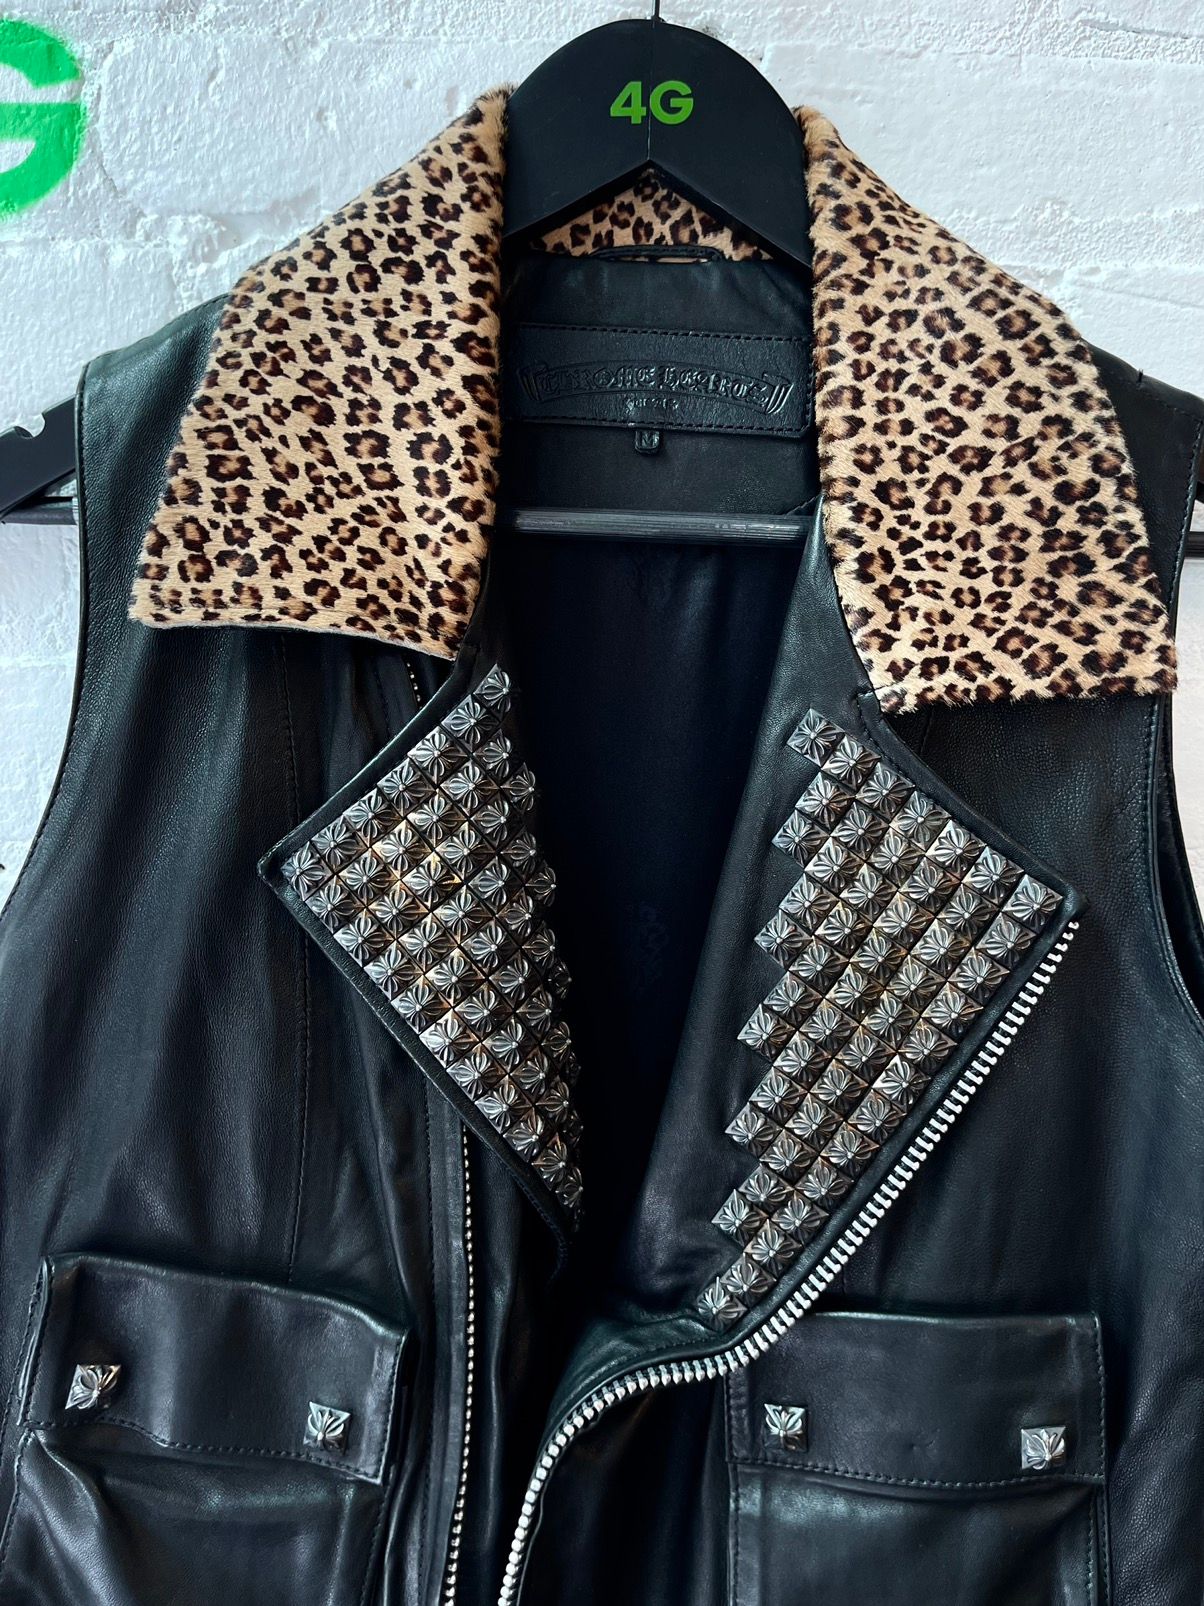 Black Louis Vuitton Winter Jacket - RockStar Jacket